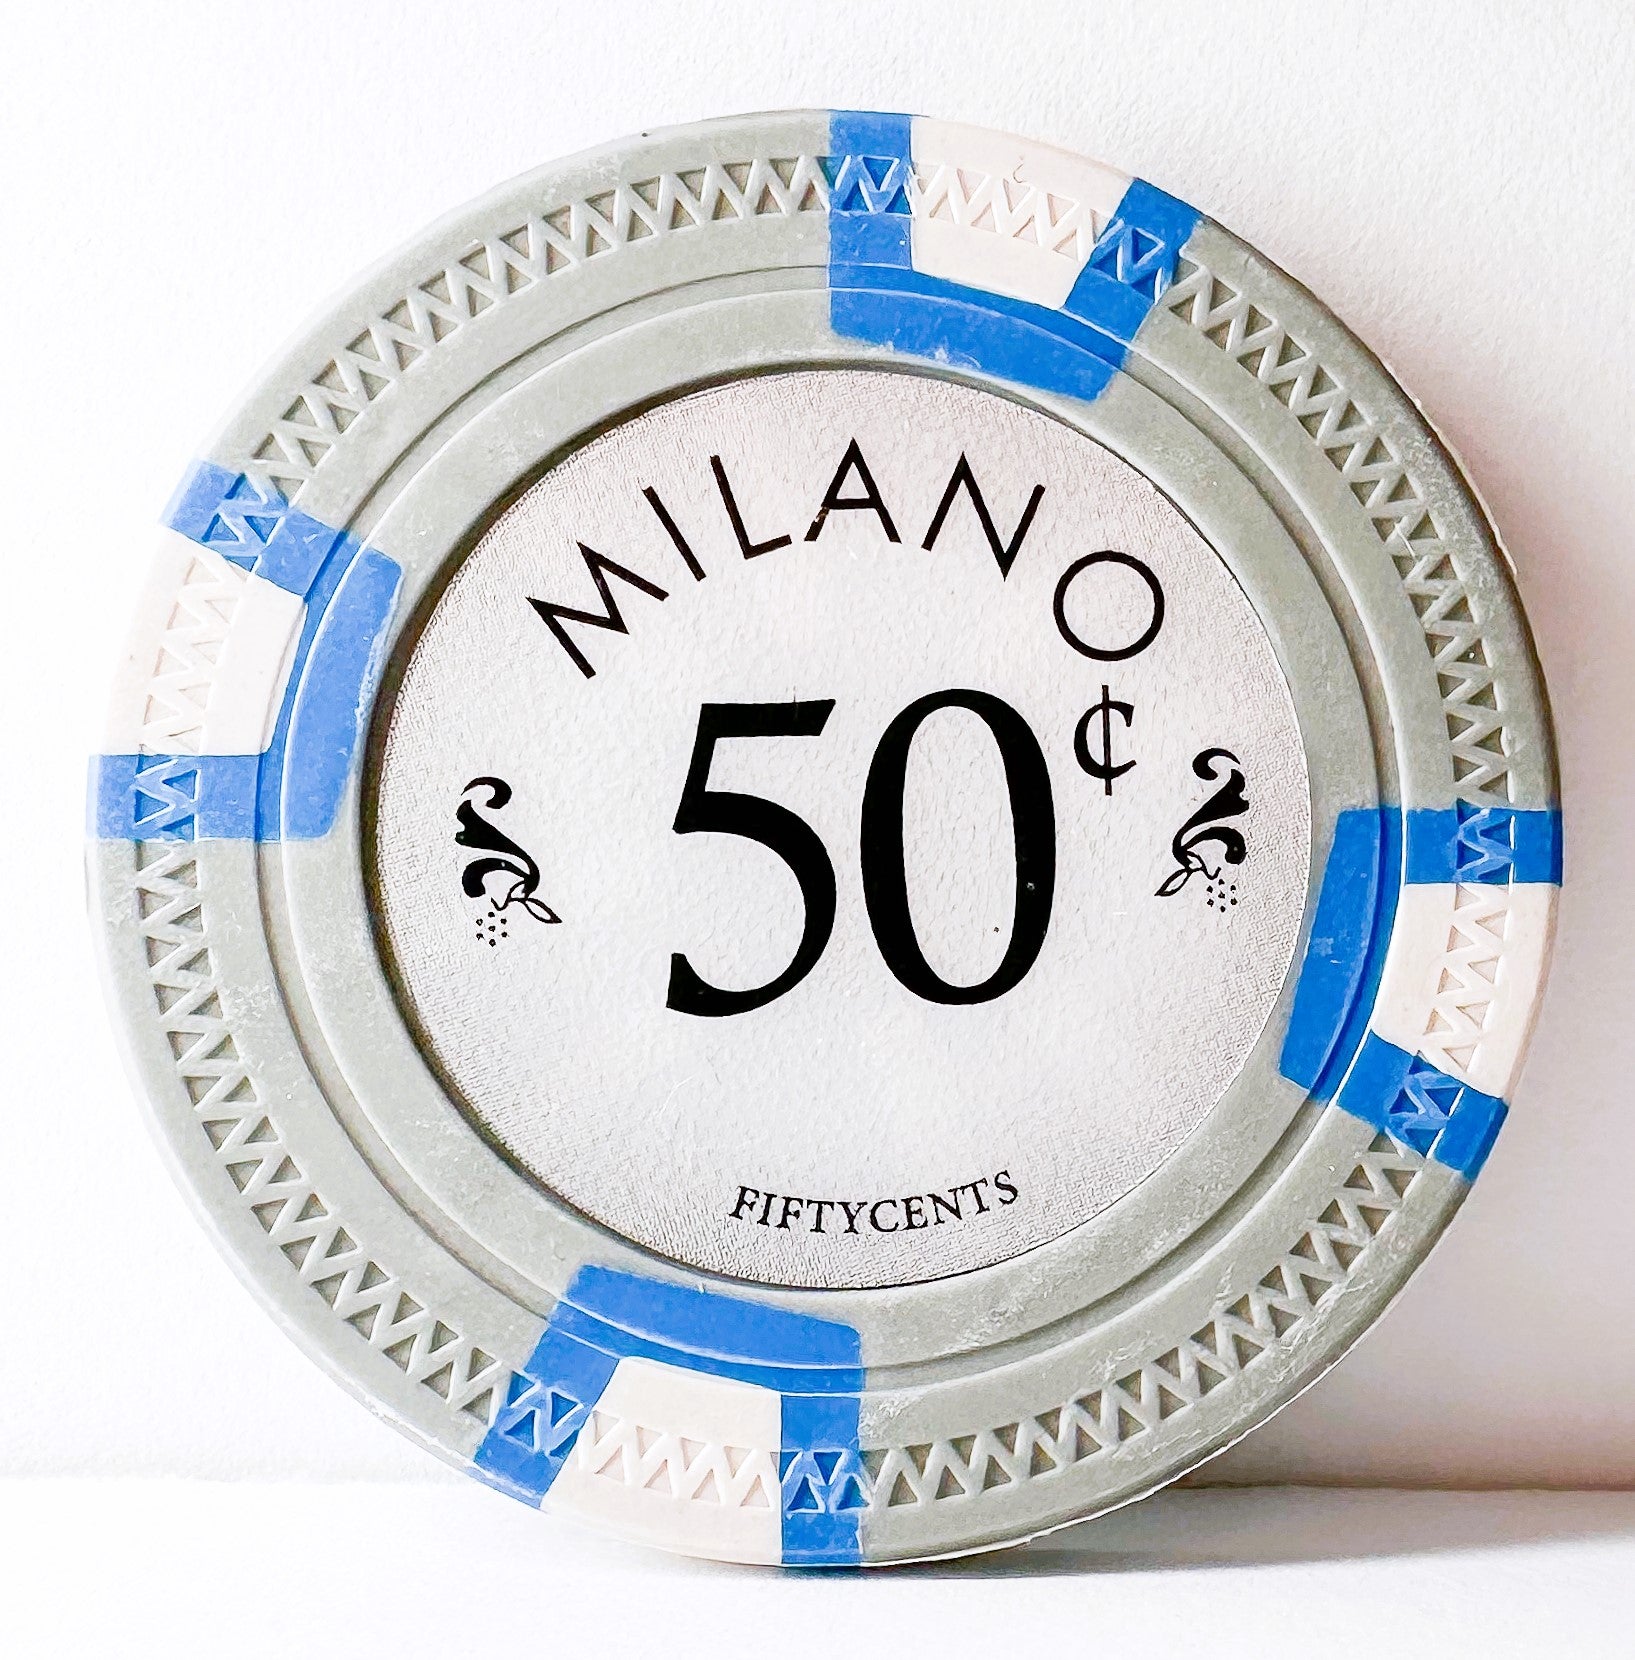 Milano 50 cent poker chip